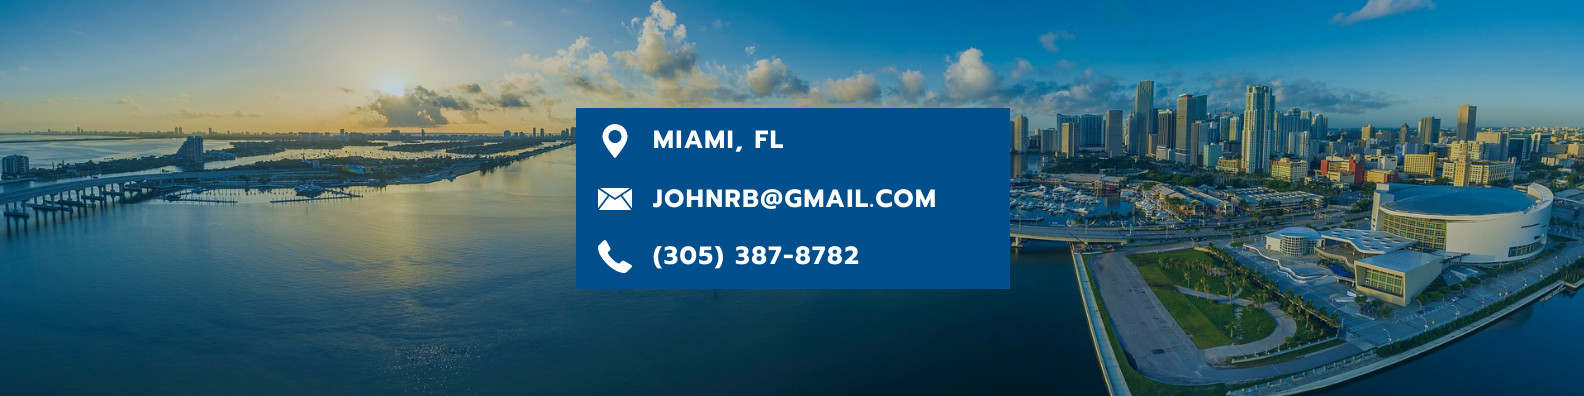 JohnRB Miami Linkedin Profile BG Linkedin Profile Background 1584x396